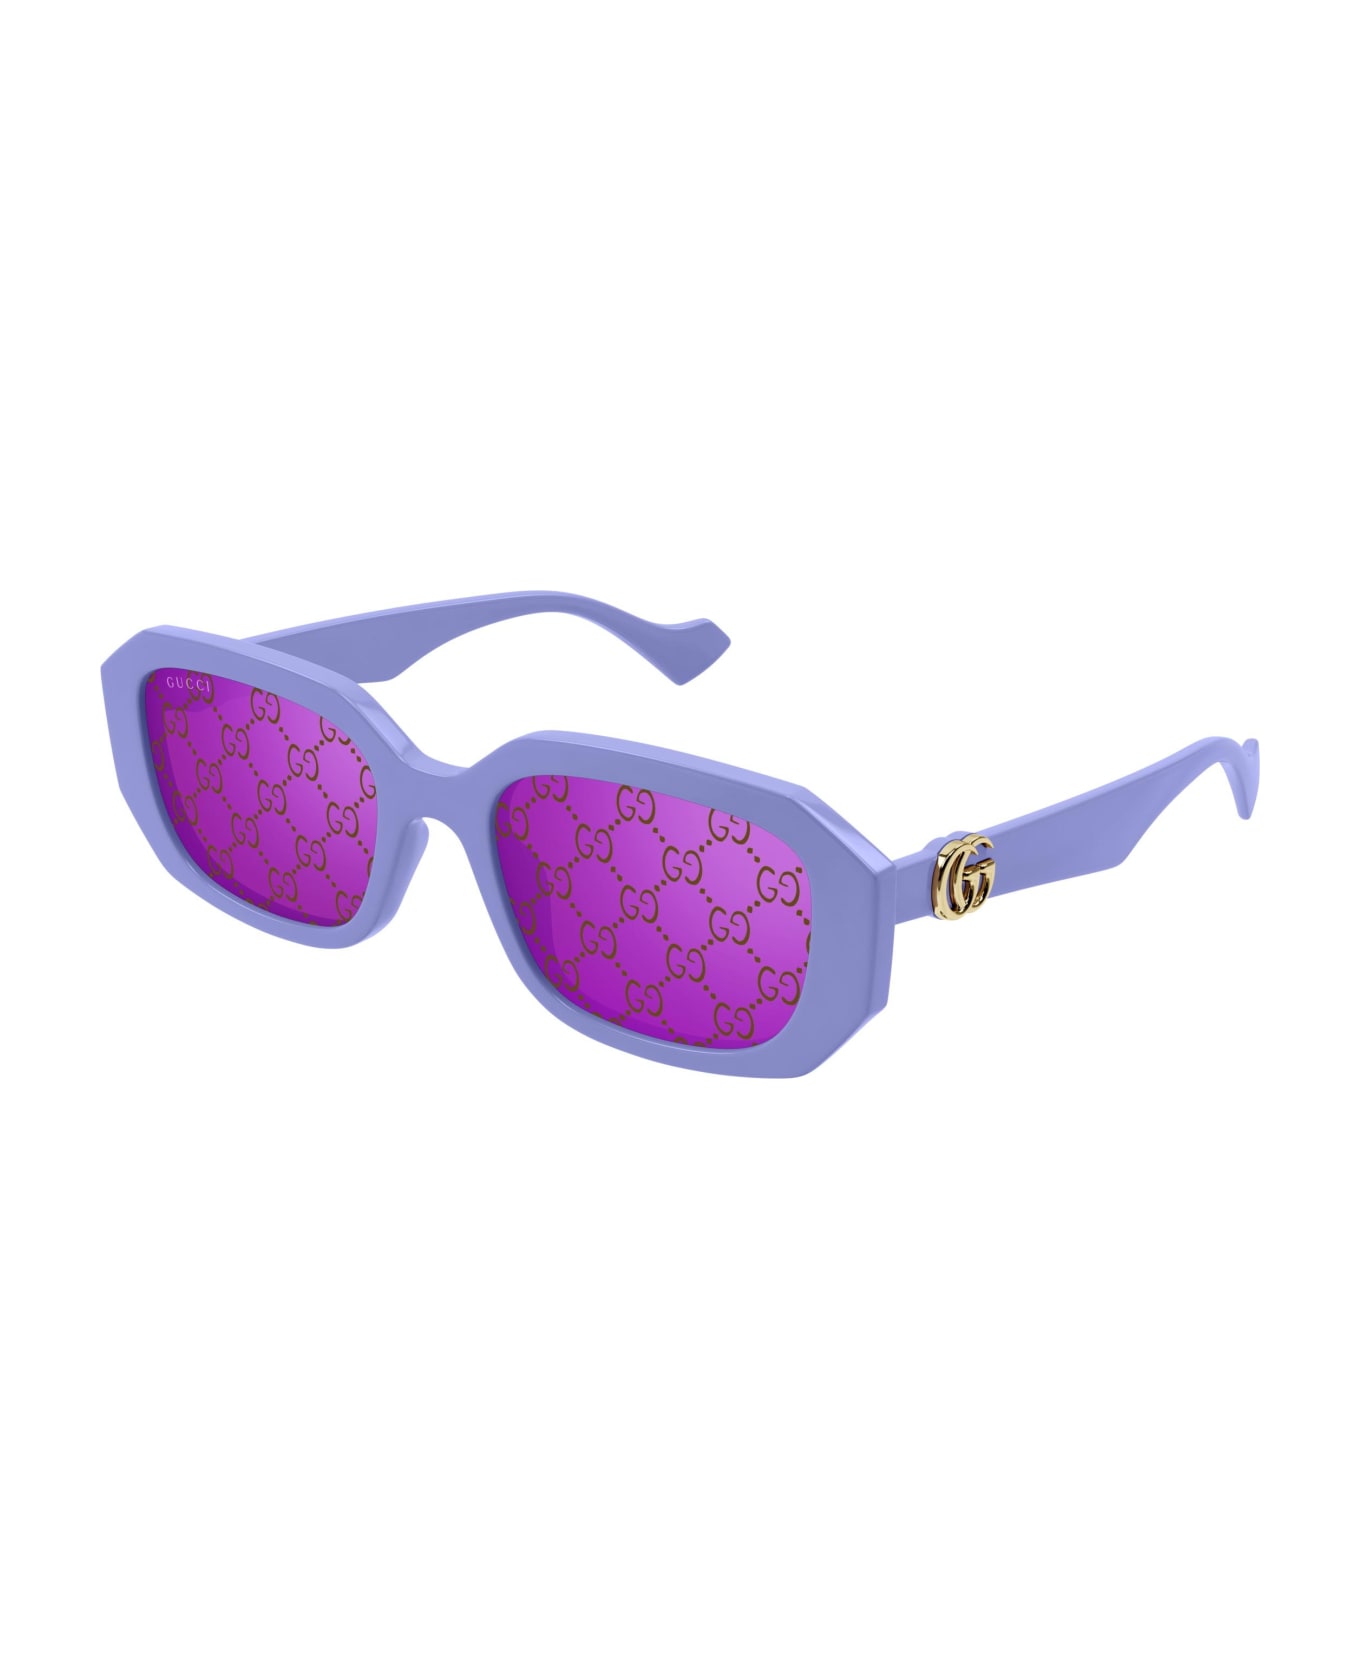 Gucci Eyewear Sunglasses - Viola/Viola